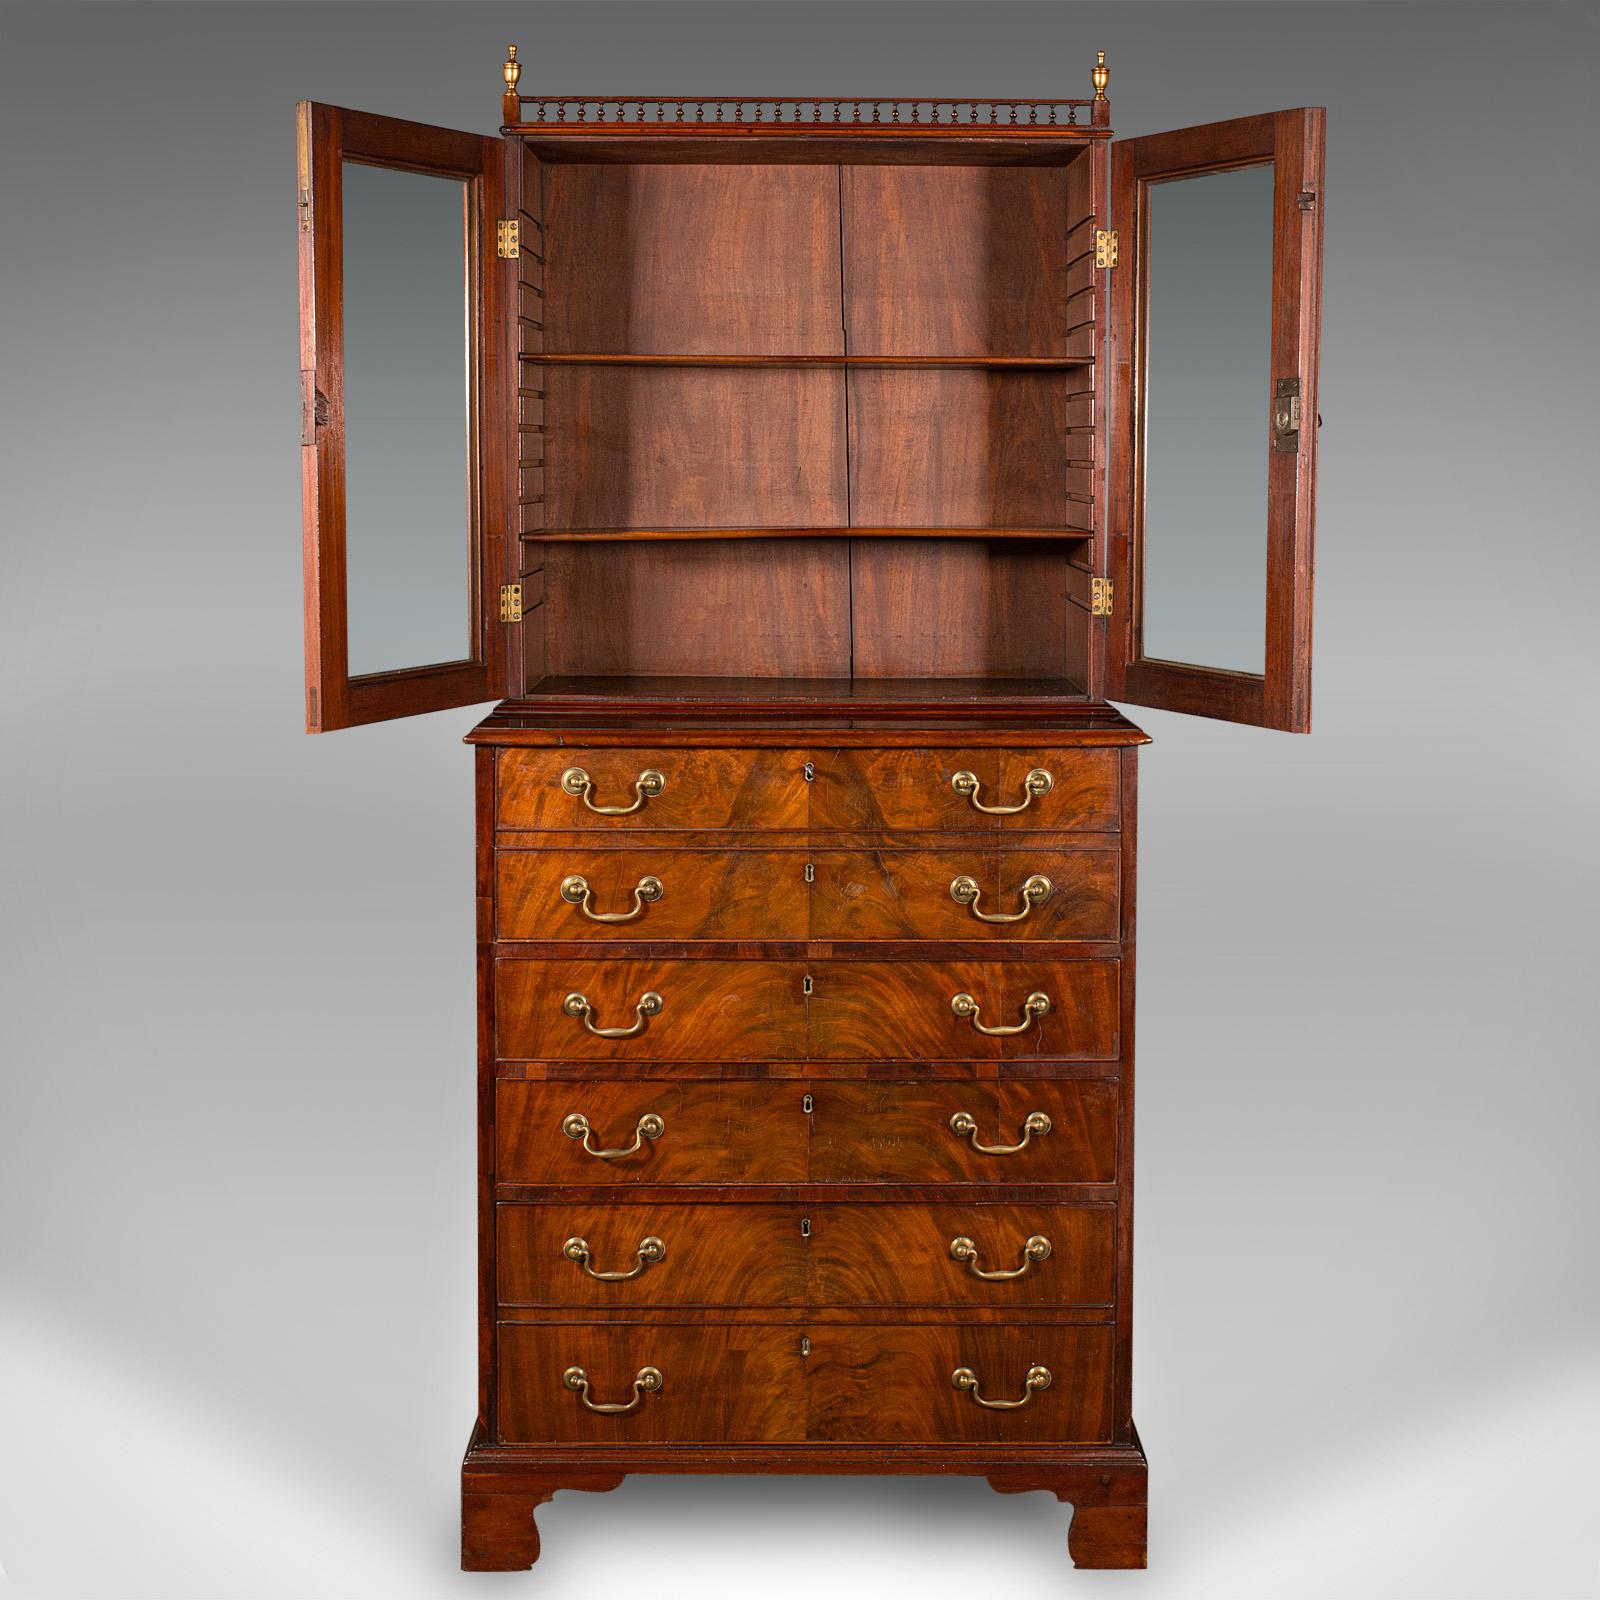 British Antique Author's Chest, English, Secretaire Cabinet, Glazed Bookcase, Georgian